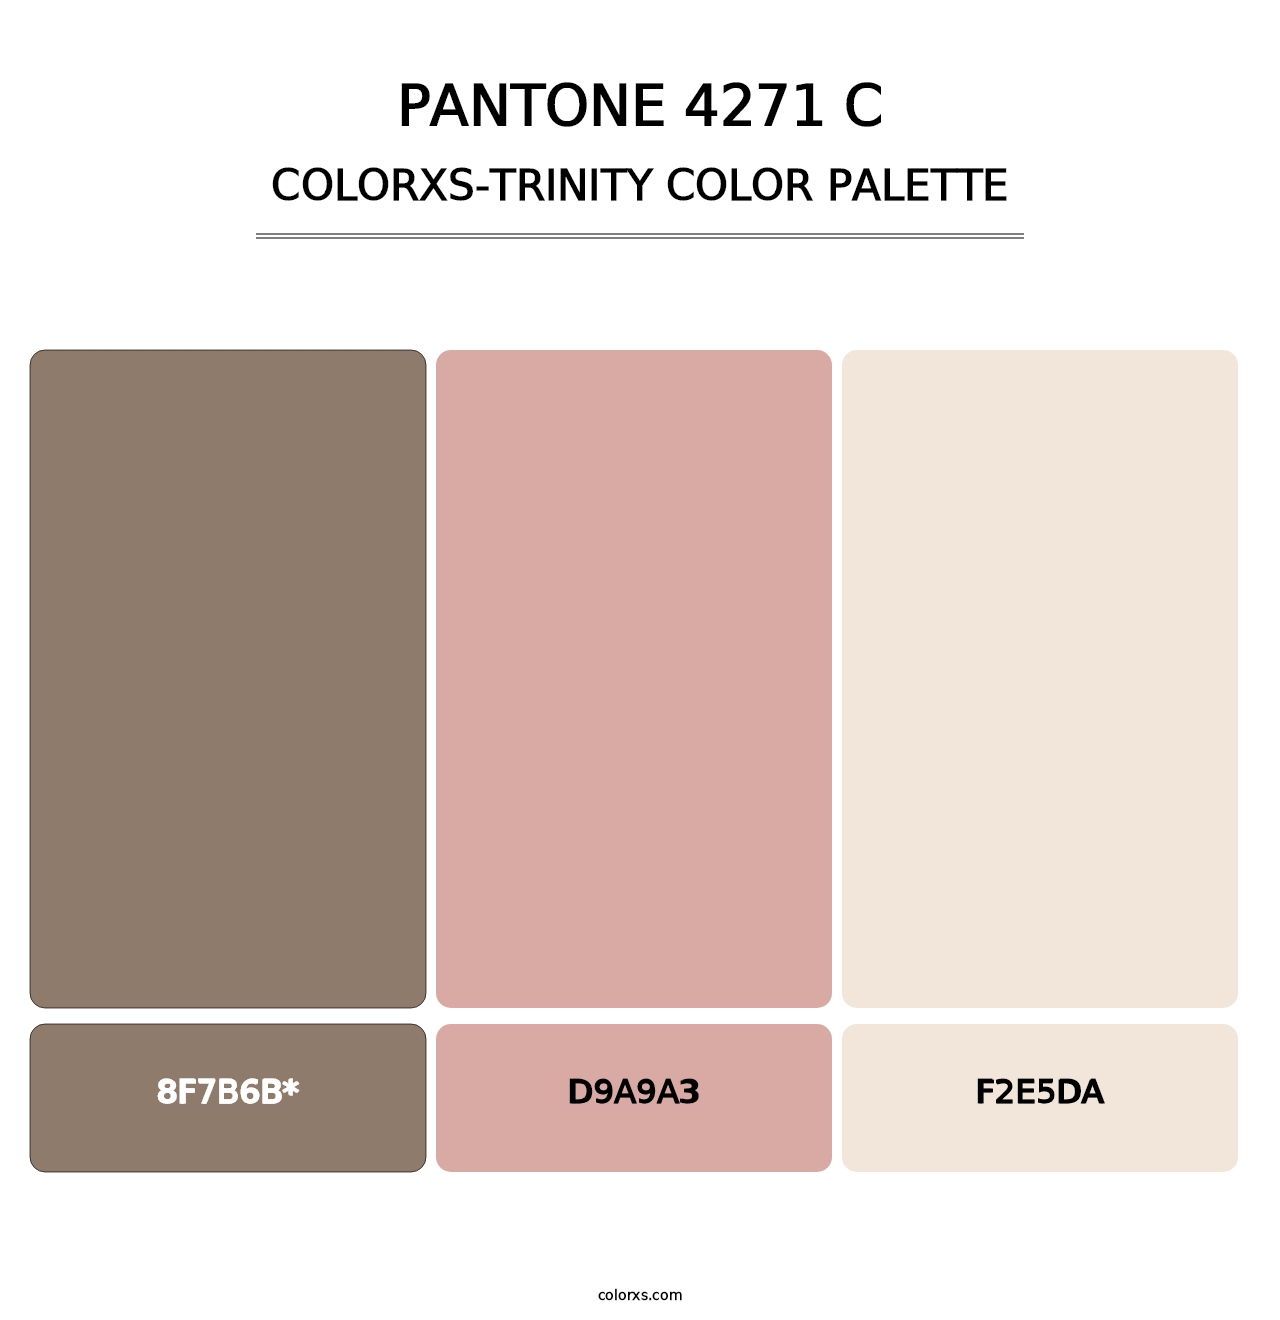 PANTONE 4271 C - Colorxs Trinity Palette